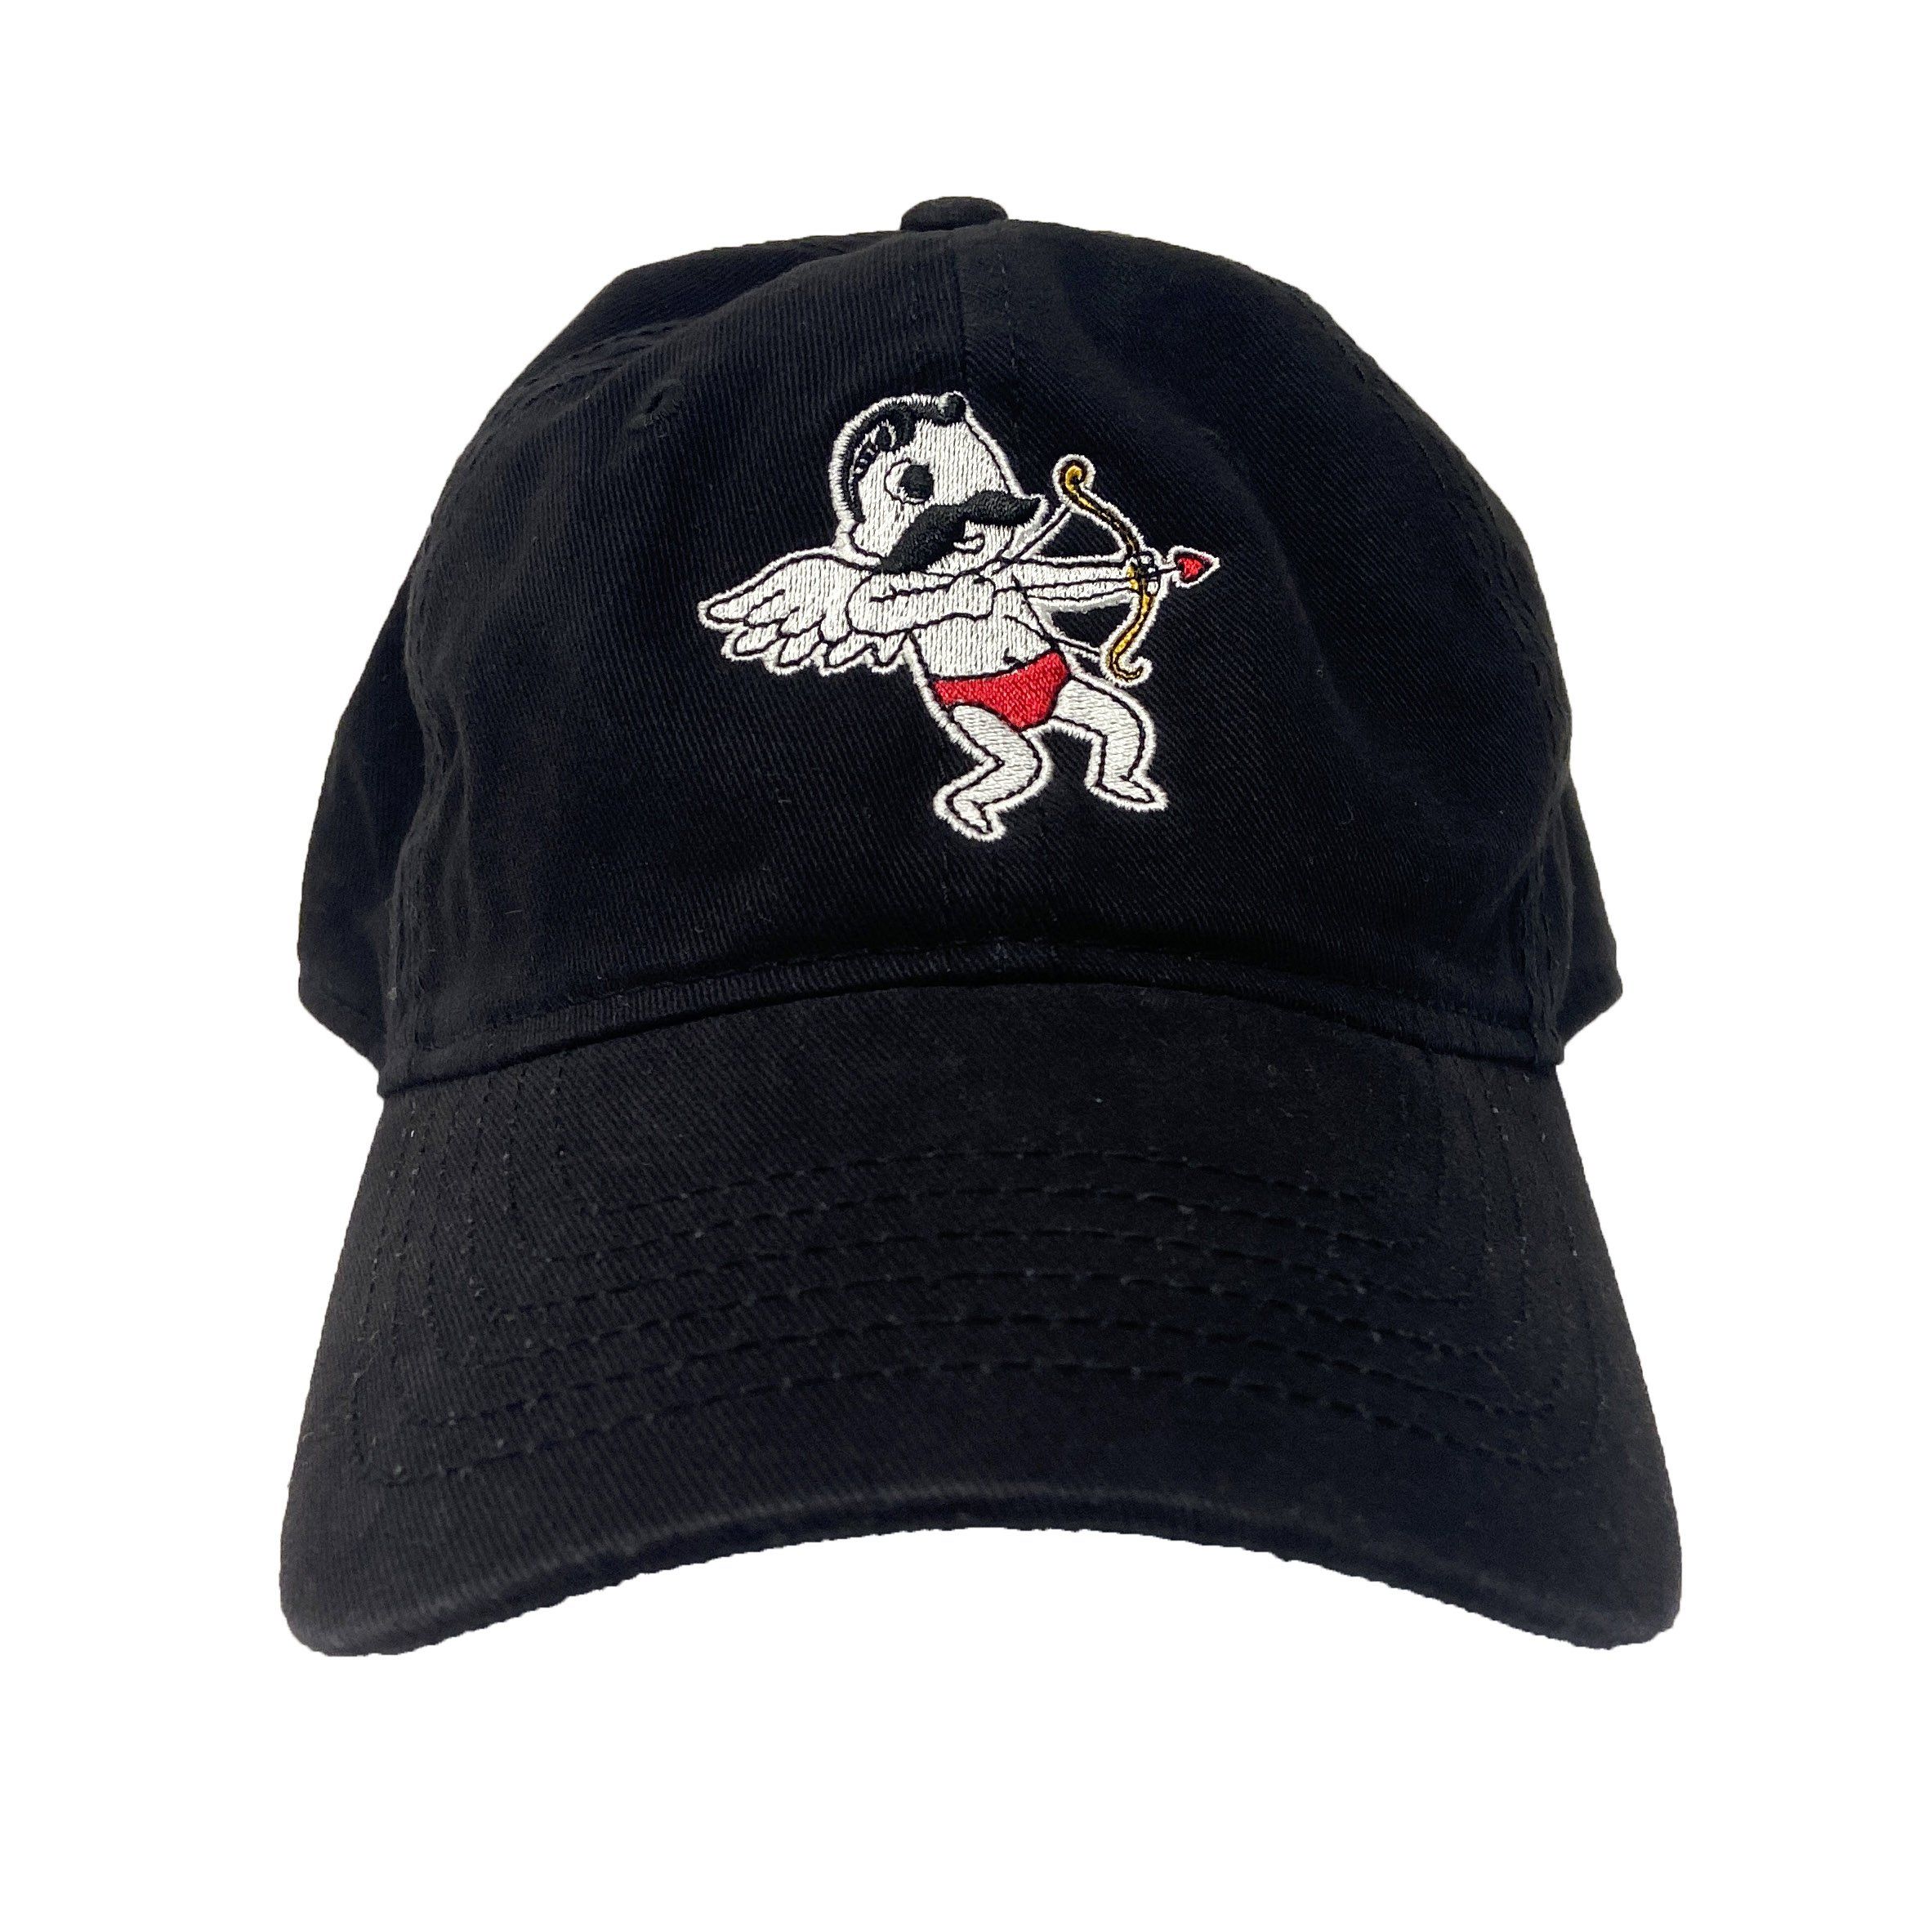 Boh Cupid (Black) / Baseball Hat - Route One Apparel